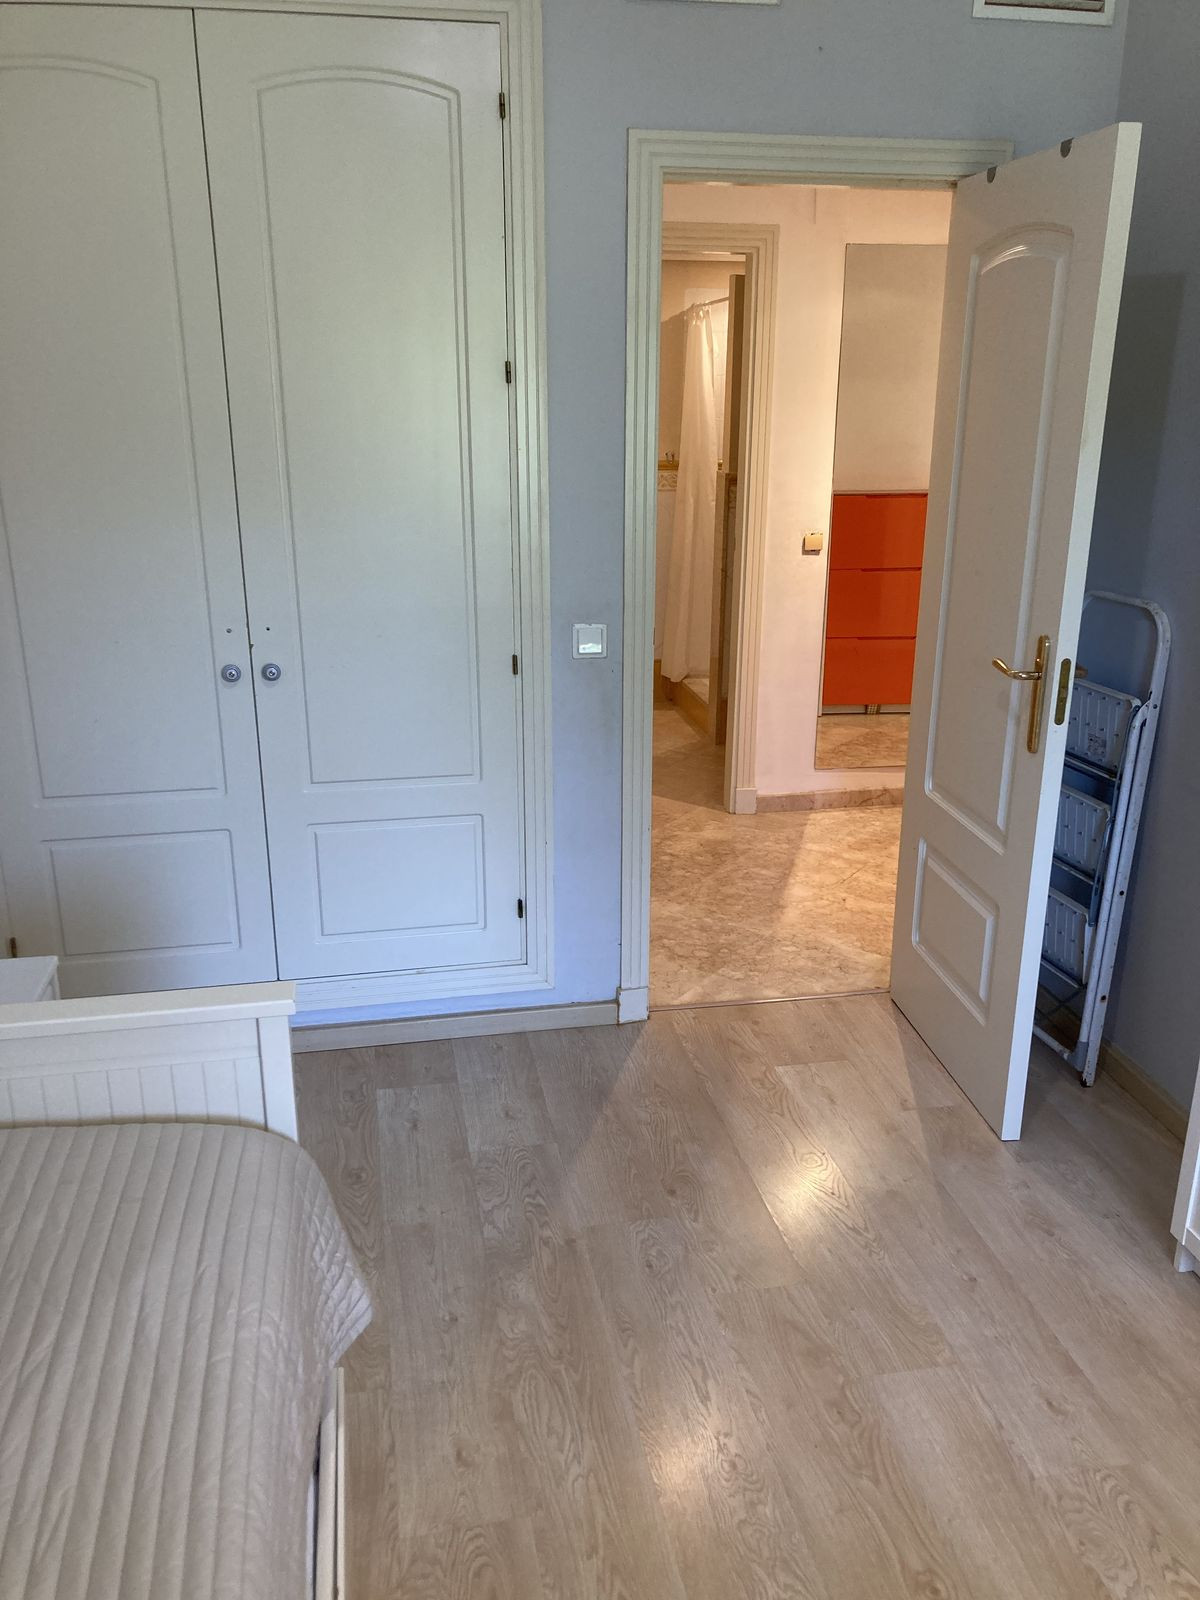 2 bedroom Apartment For Sale in La Mairena, Málaga - thumb 31